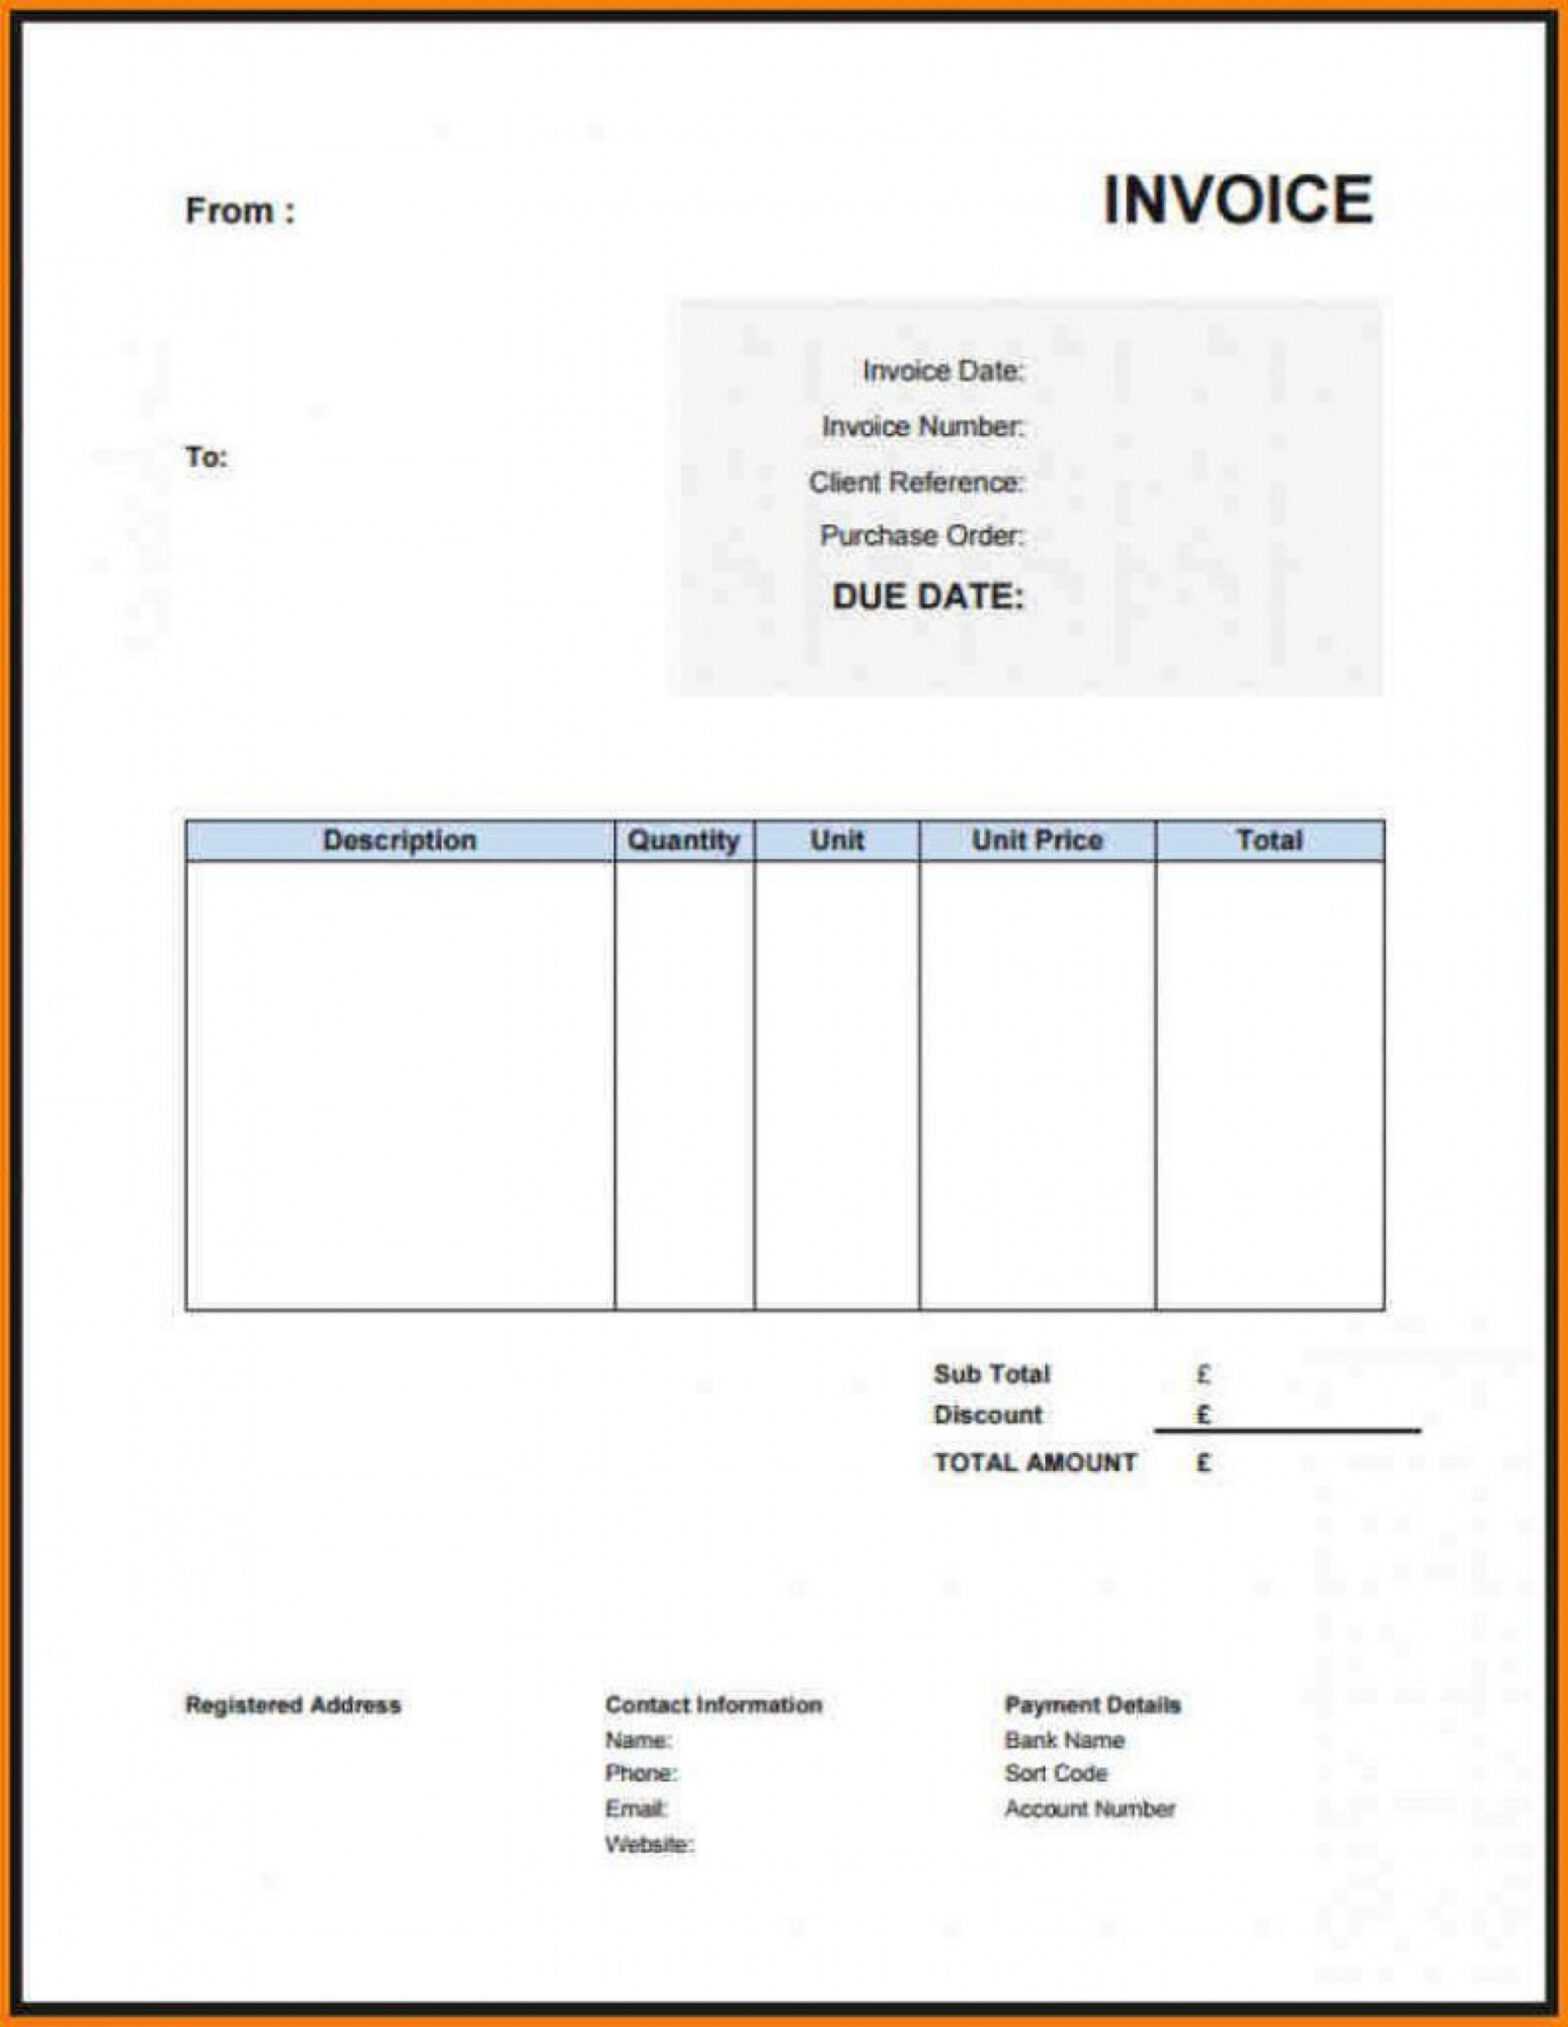 Simple Invoice Template Uk Free ~ Addictionary throughout Sample Invoice Template Uk